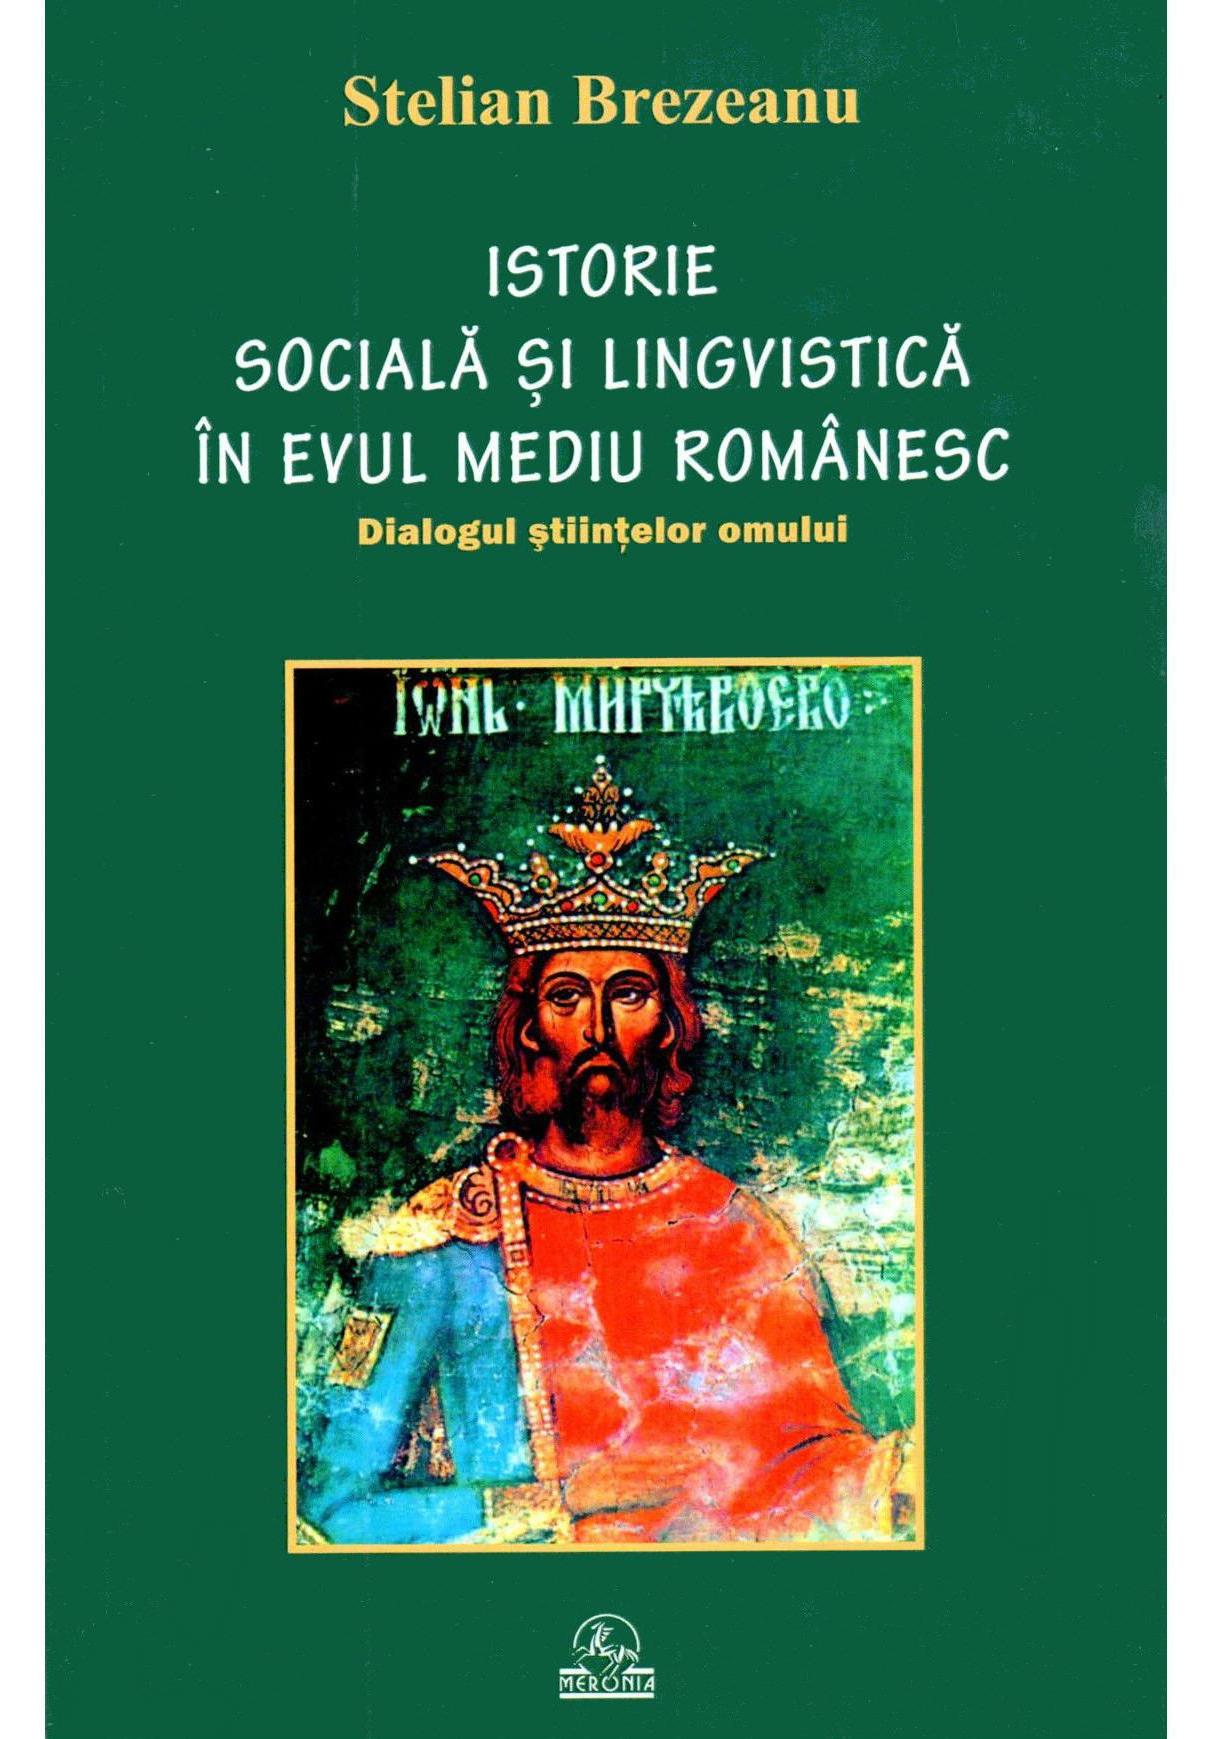 Istorie sociala si lingvistica in Evul Mediu romanesc - Stelian Brezeanu